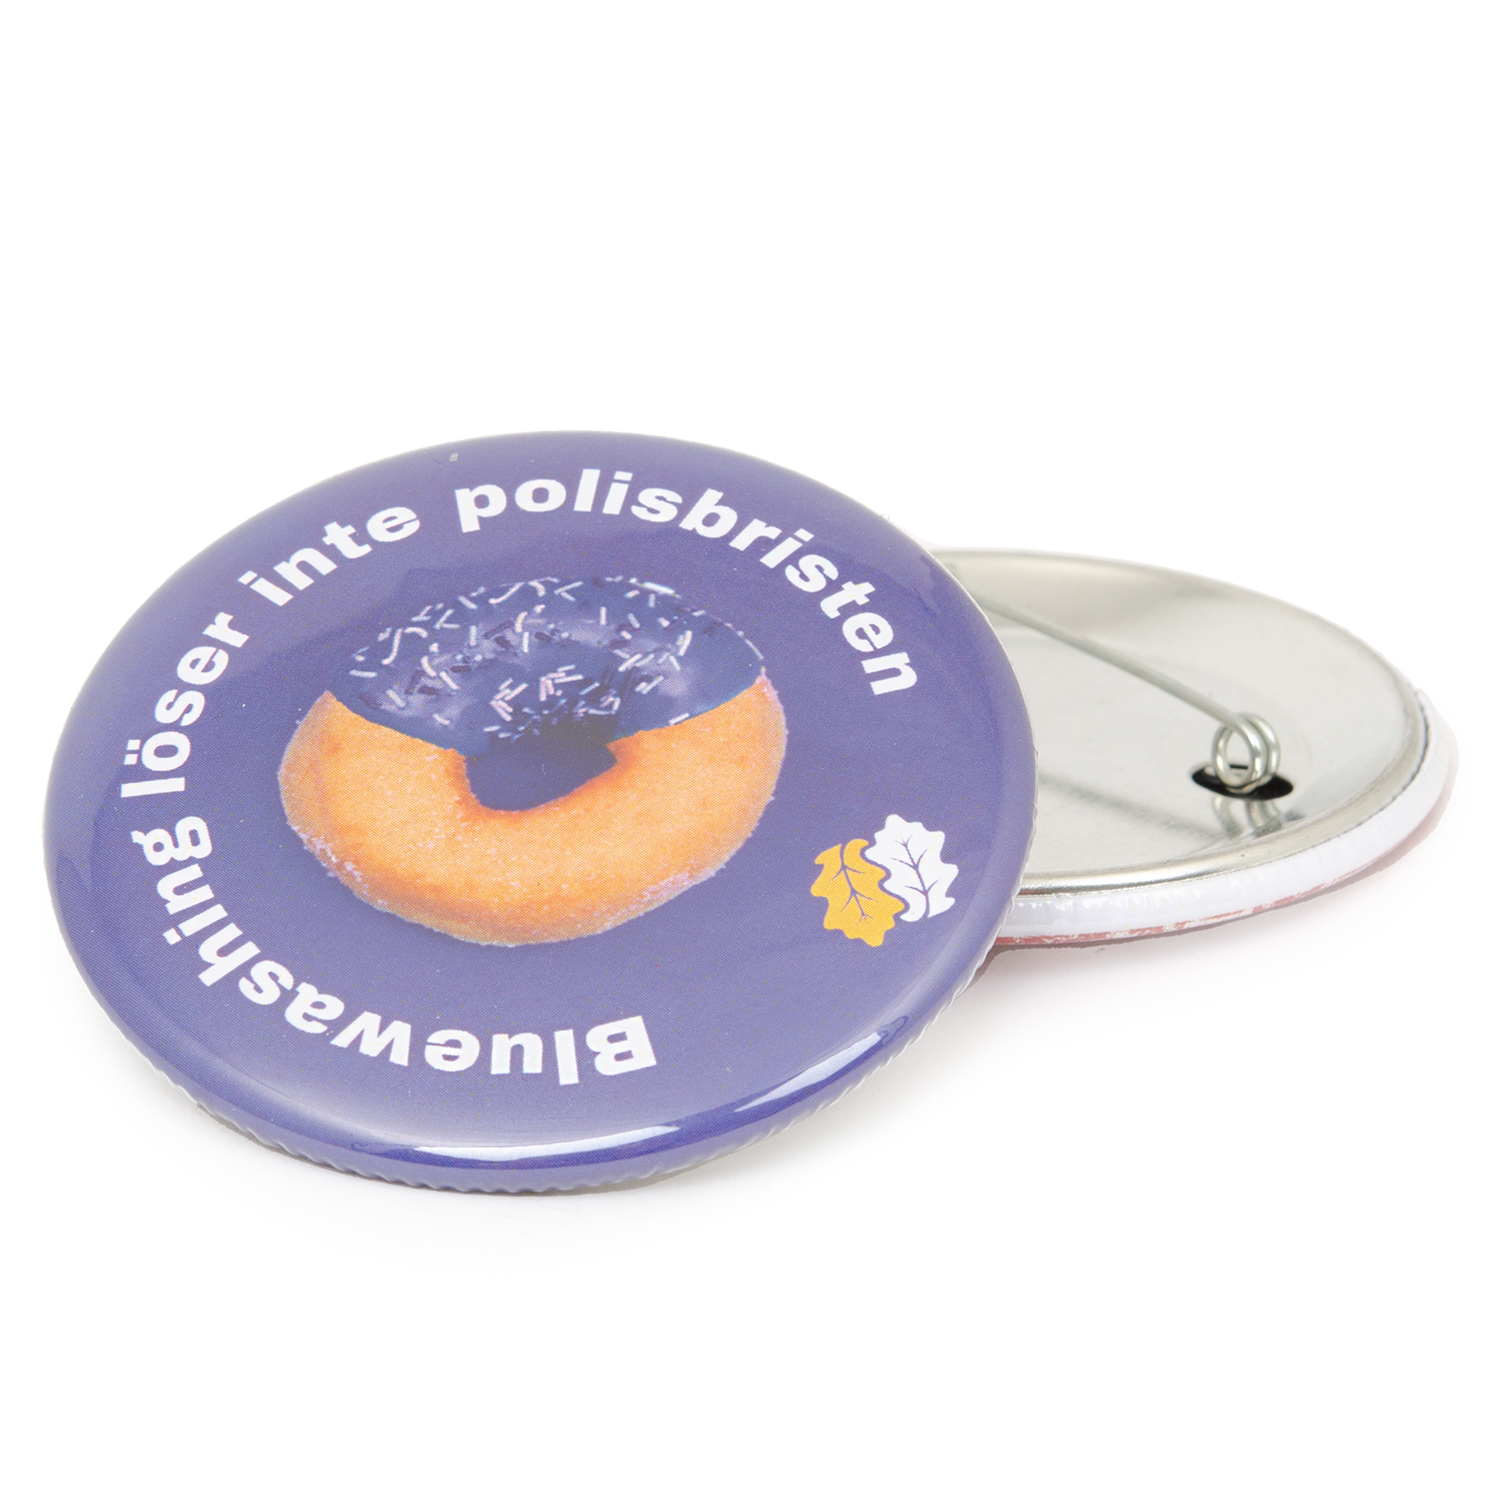 Polisforbundet bluewashing button badge